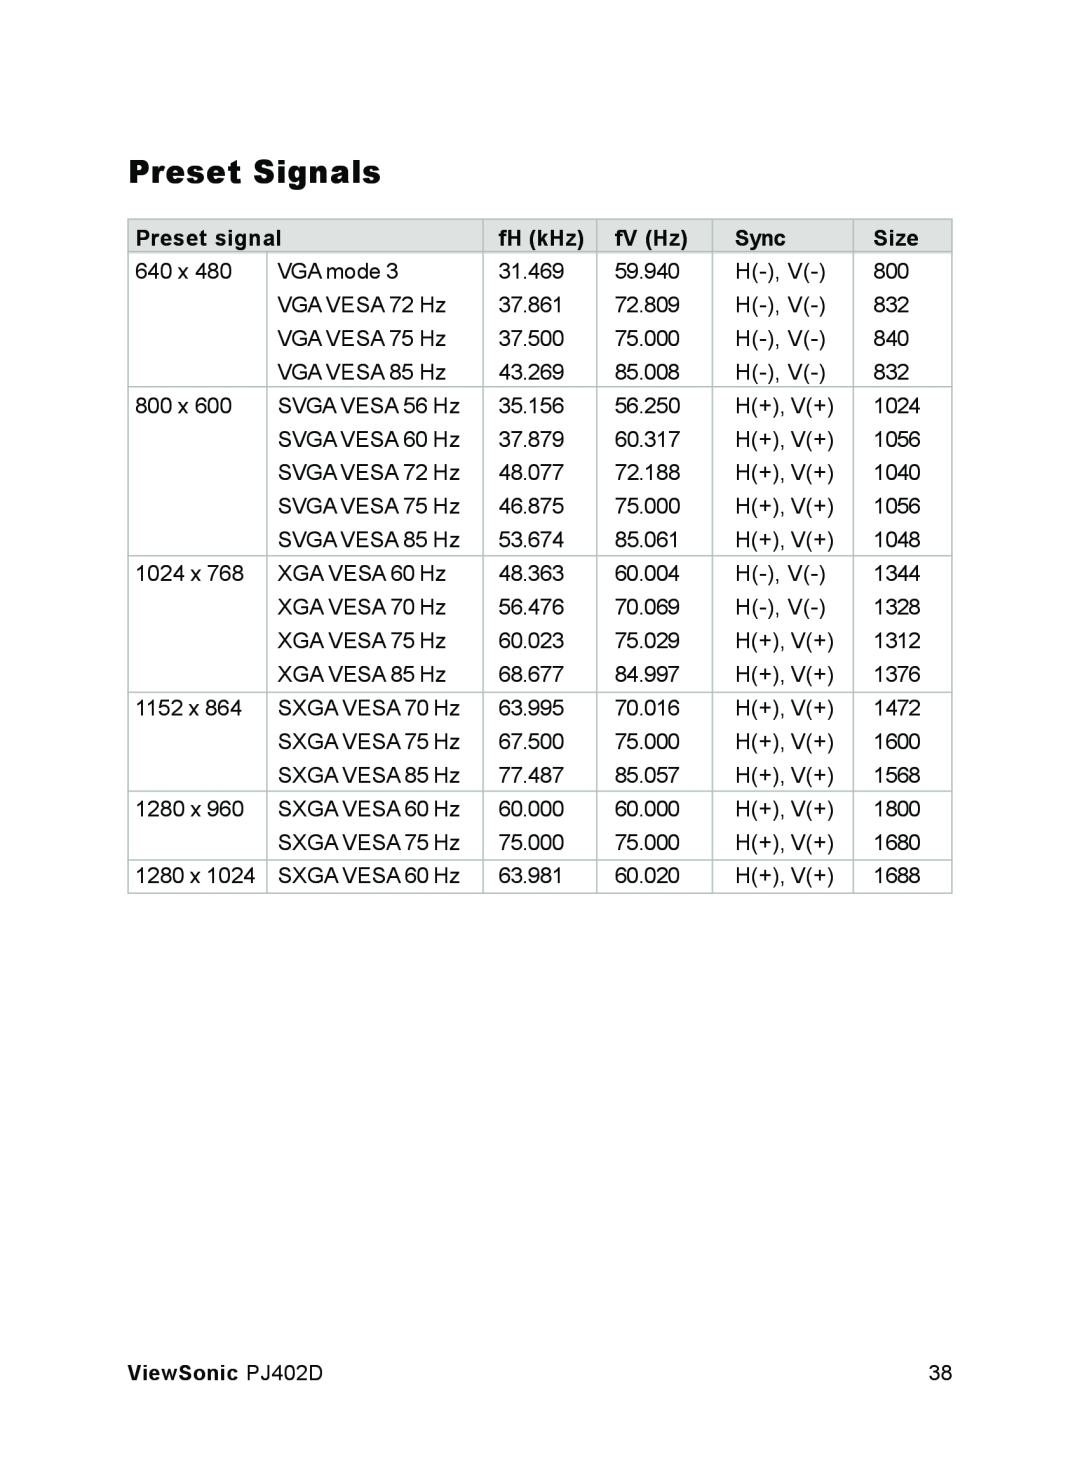 ViewSonic manual Preset Signals, Preset signal, fH kHz, fV Hz, Sync, Size, ViewSonic PJ402D 